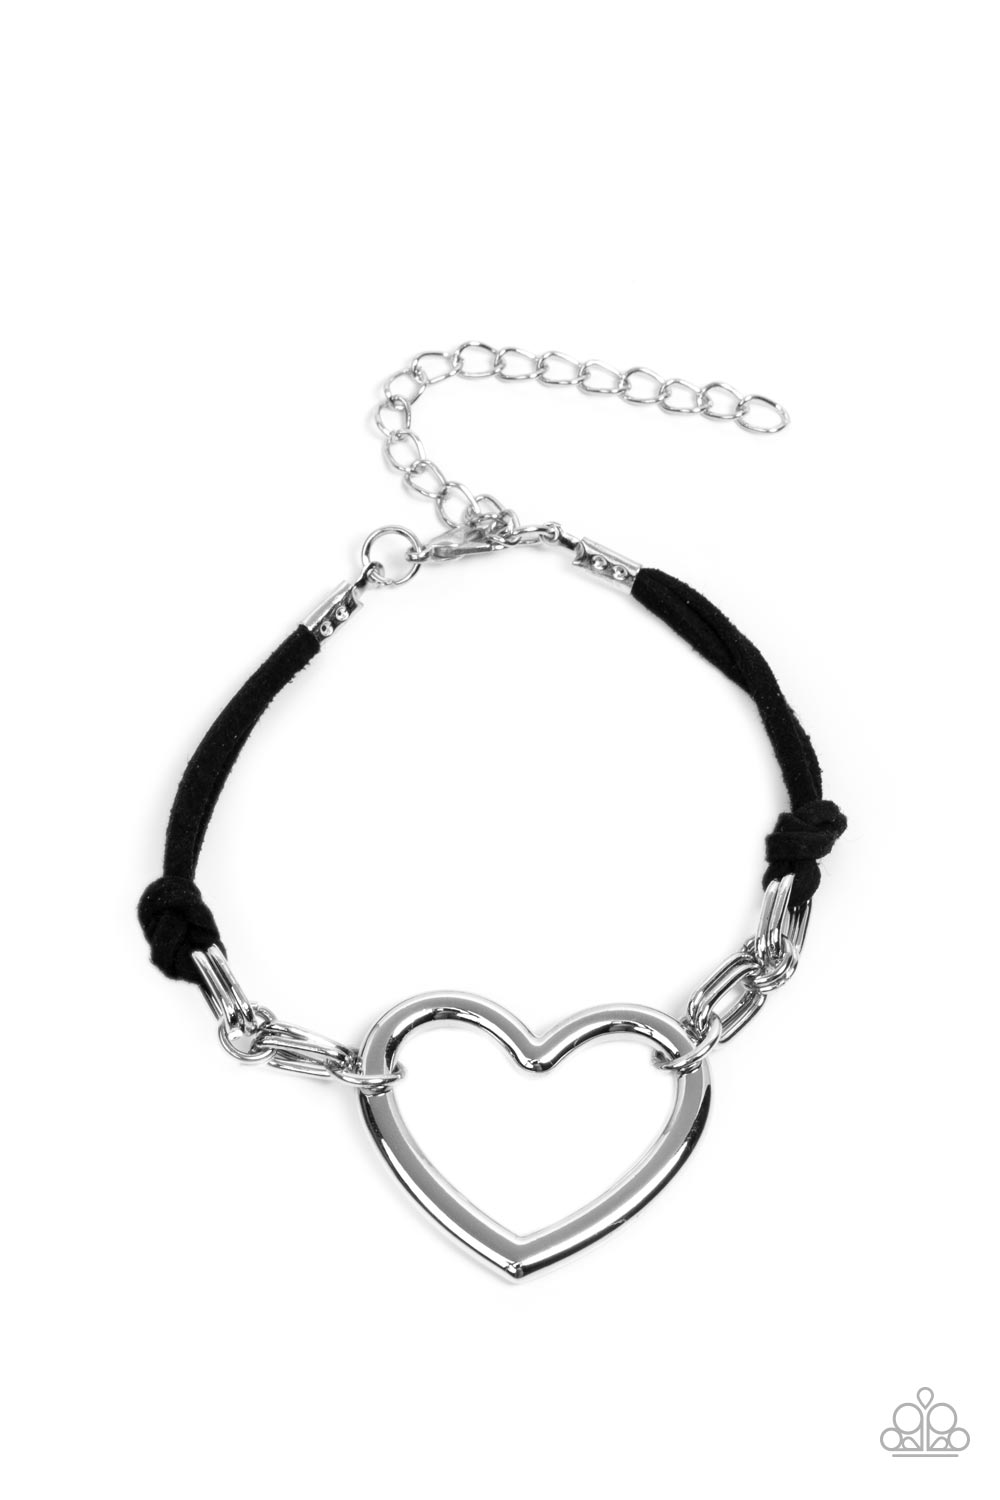 Flirty Flavour - Black Suede with Silver Heart Bracelet